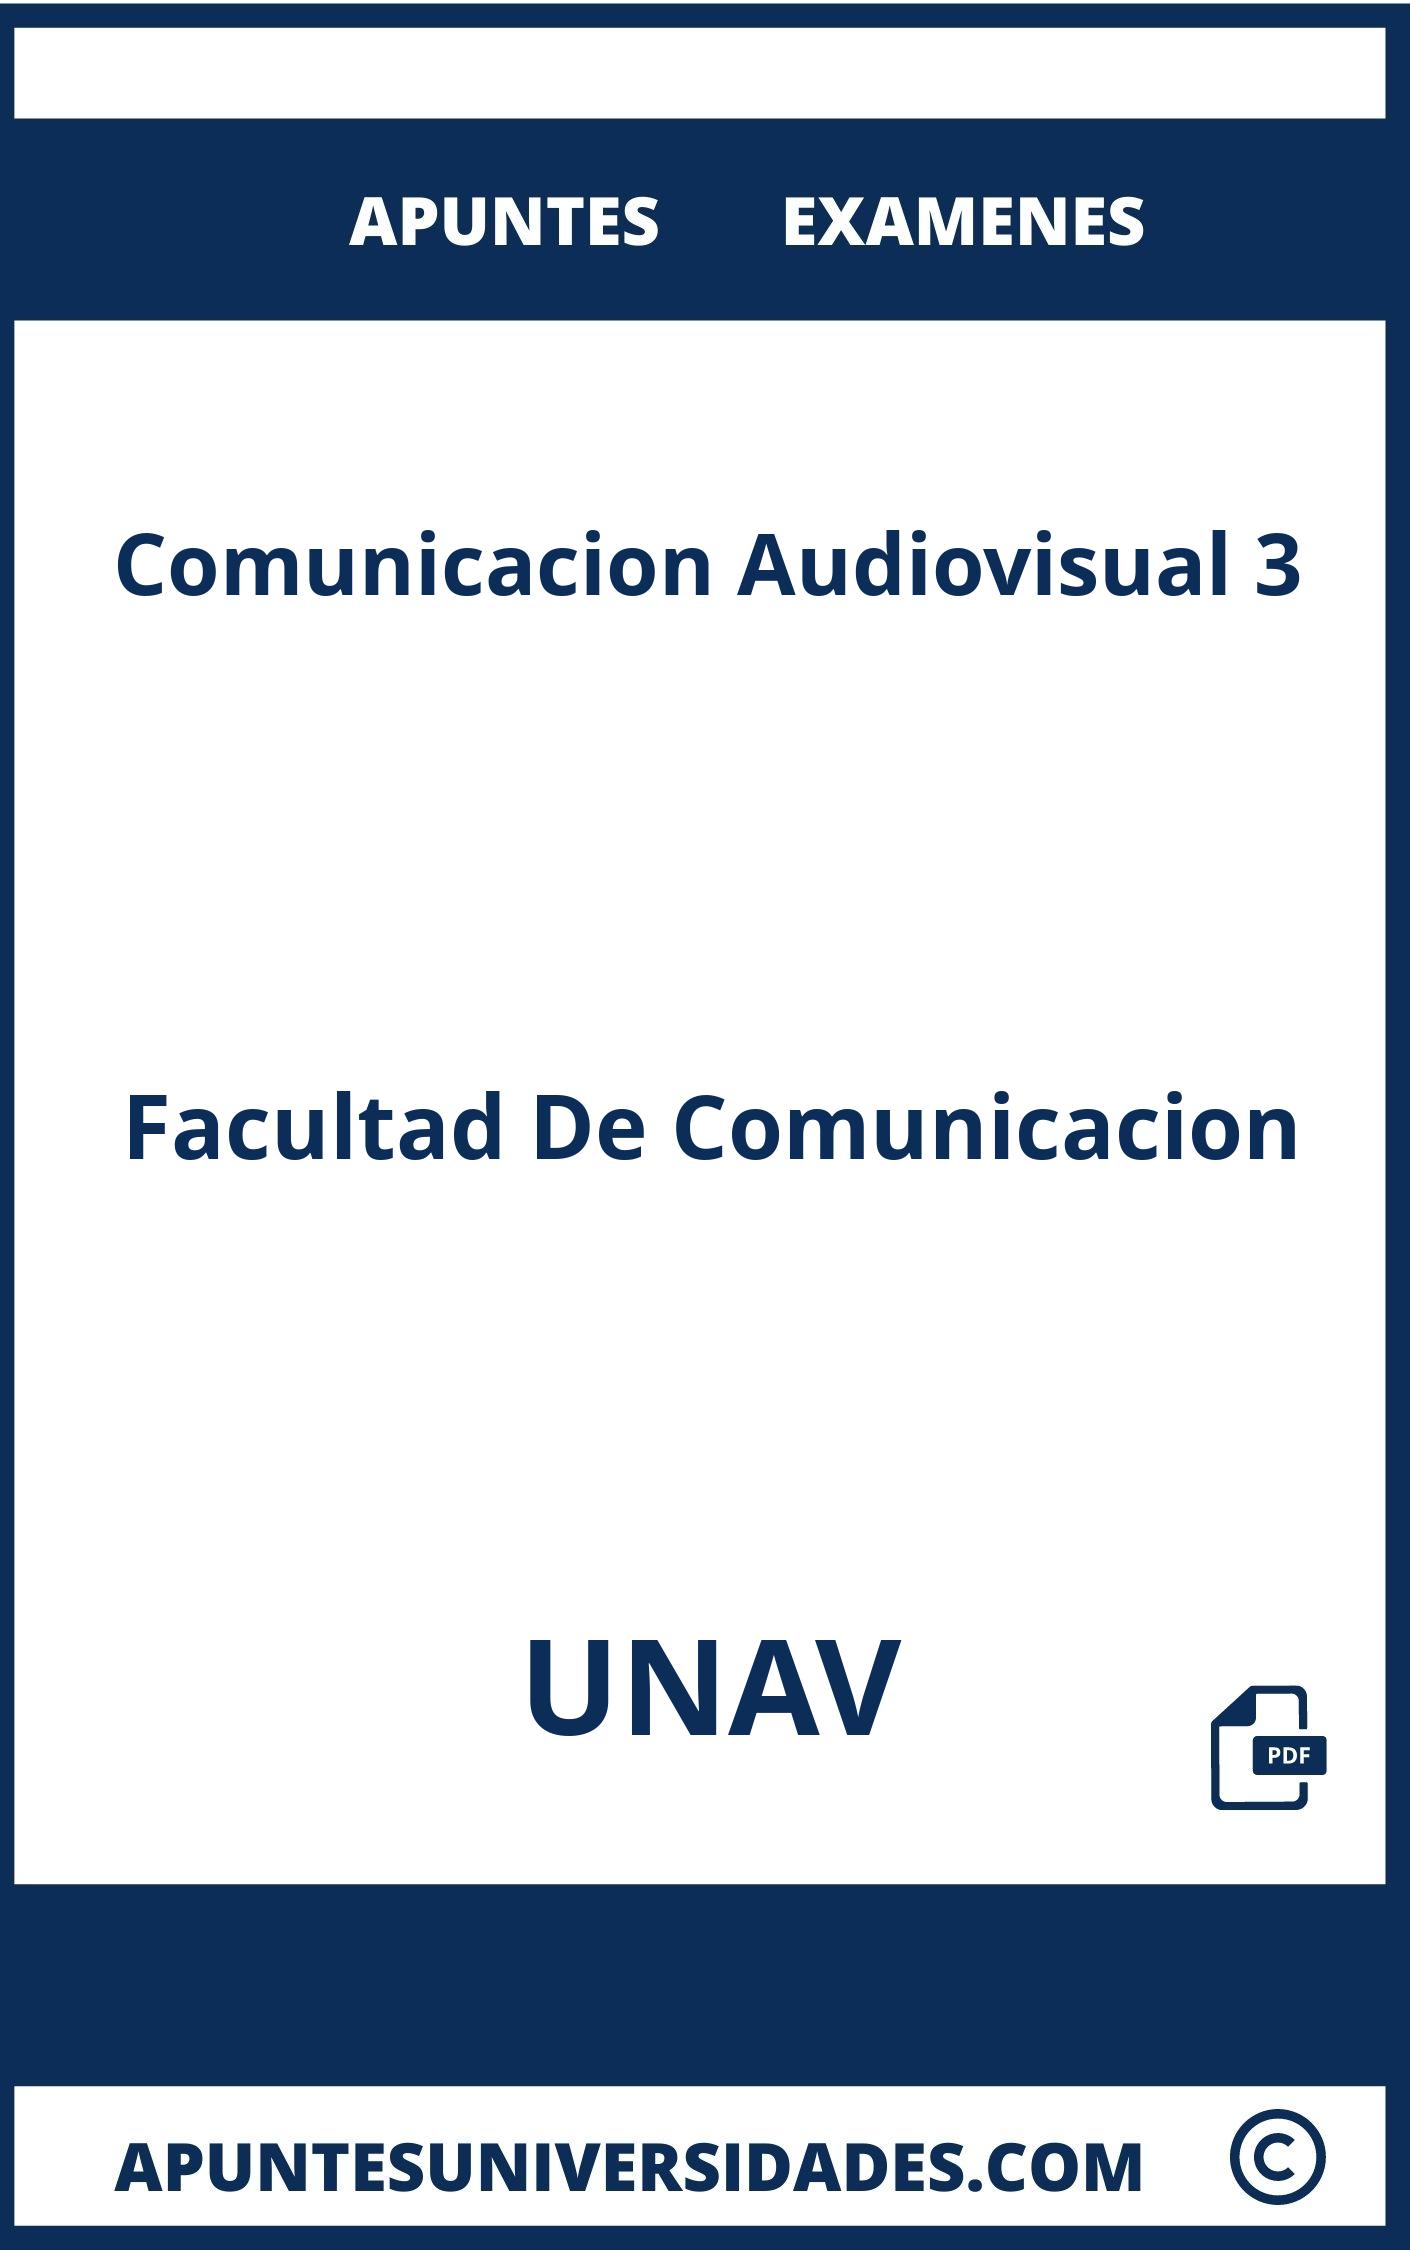 Apuntes Examenes Comunicacion Audiovisual 3 UNAV